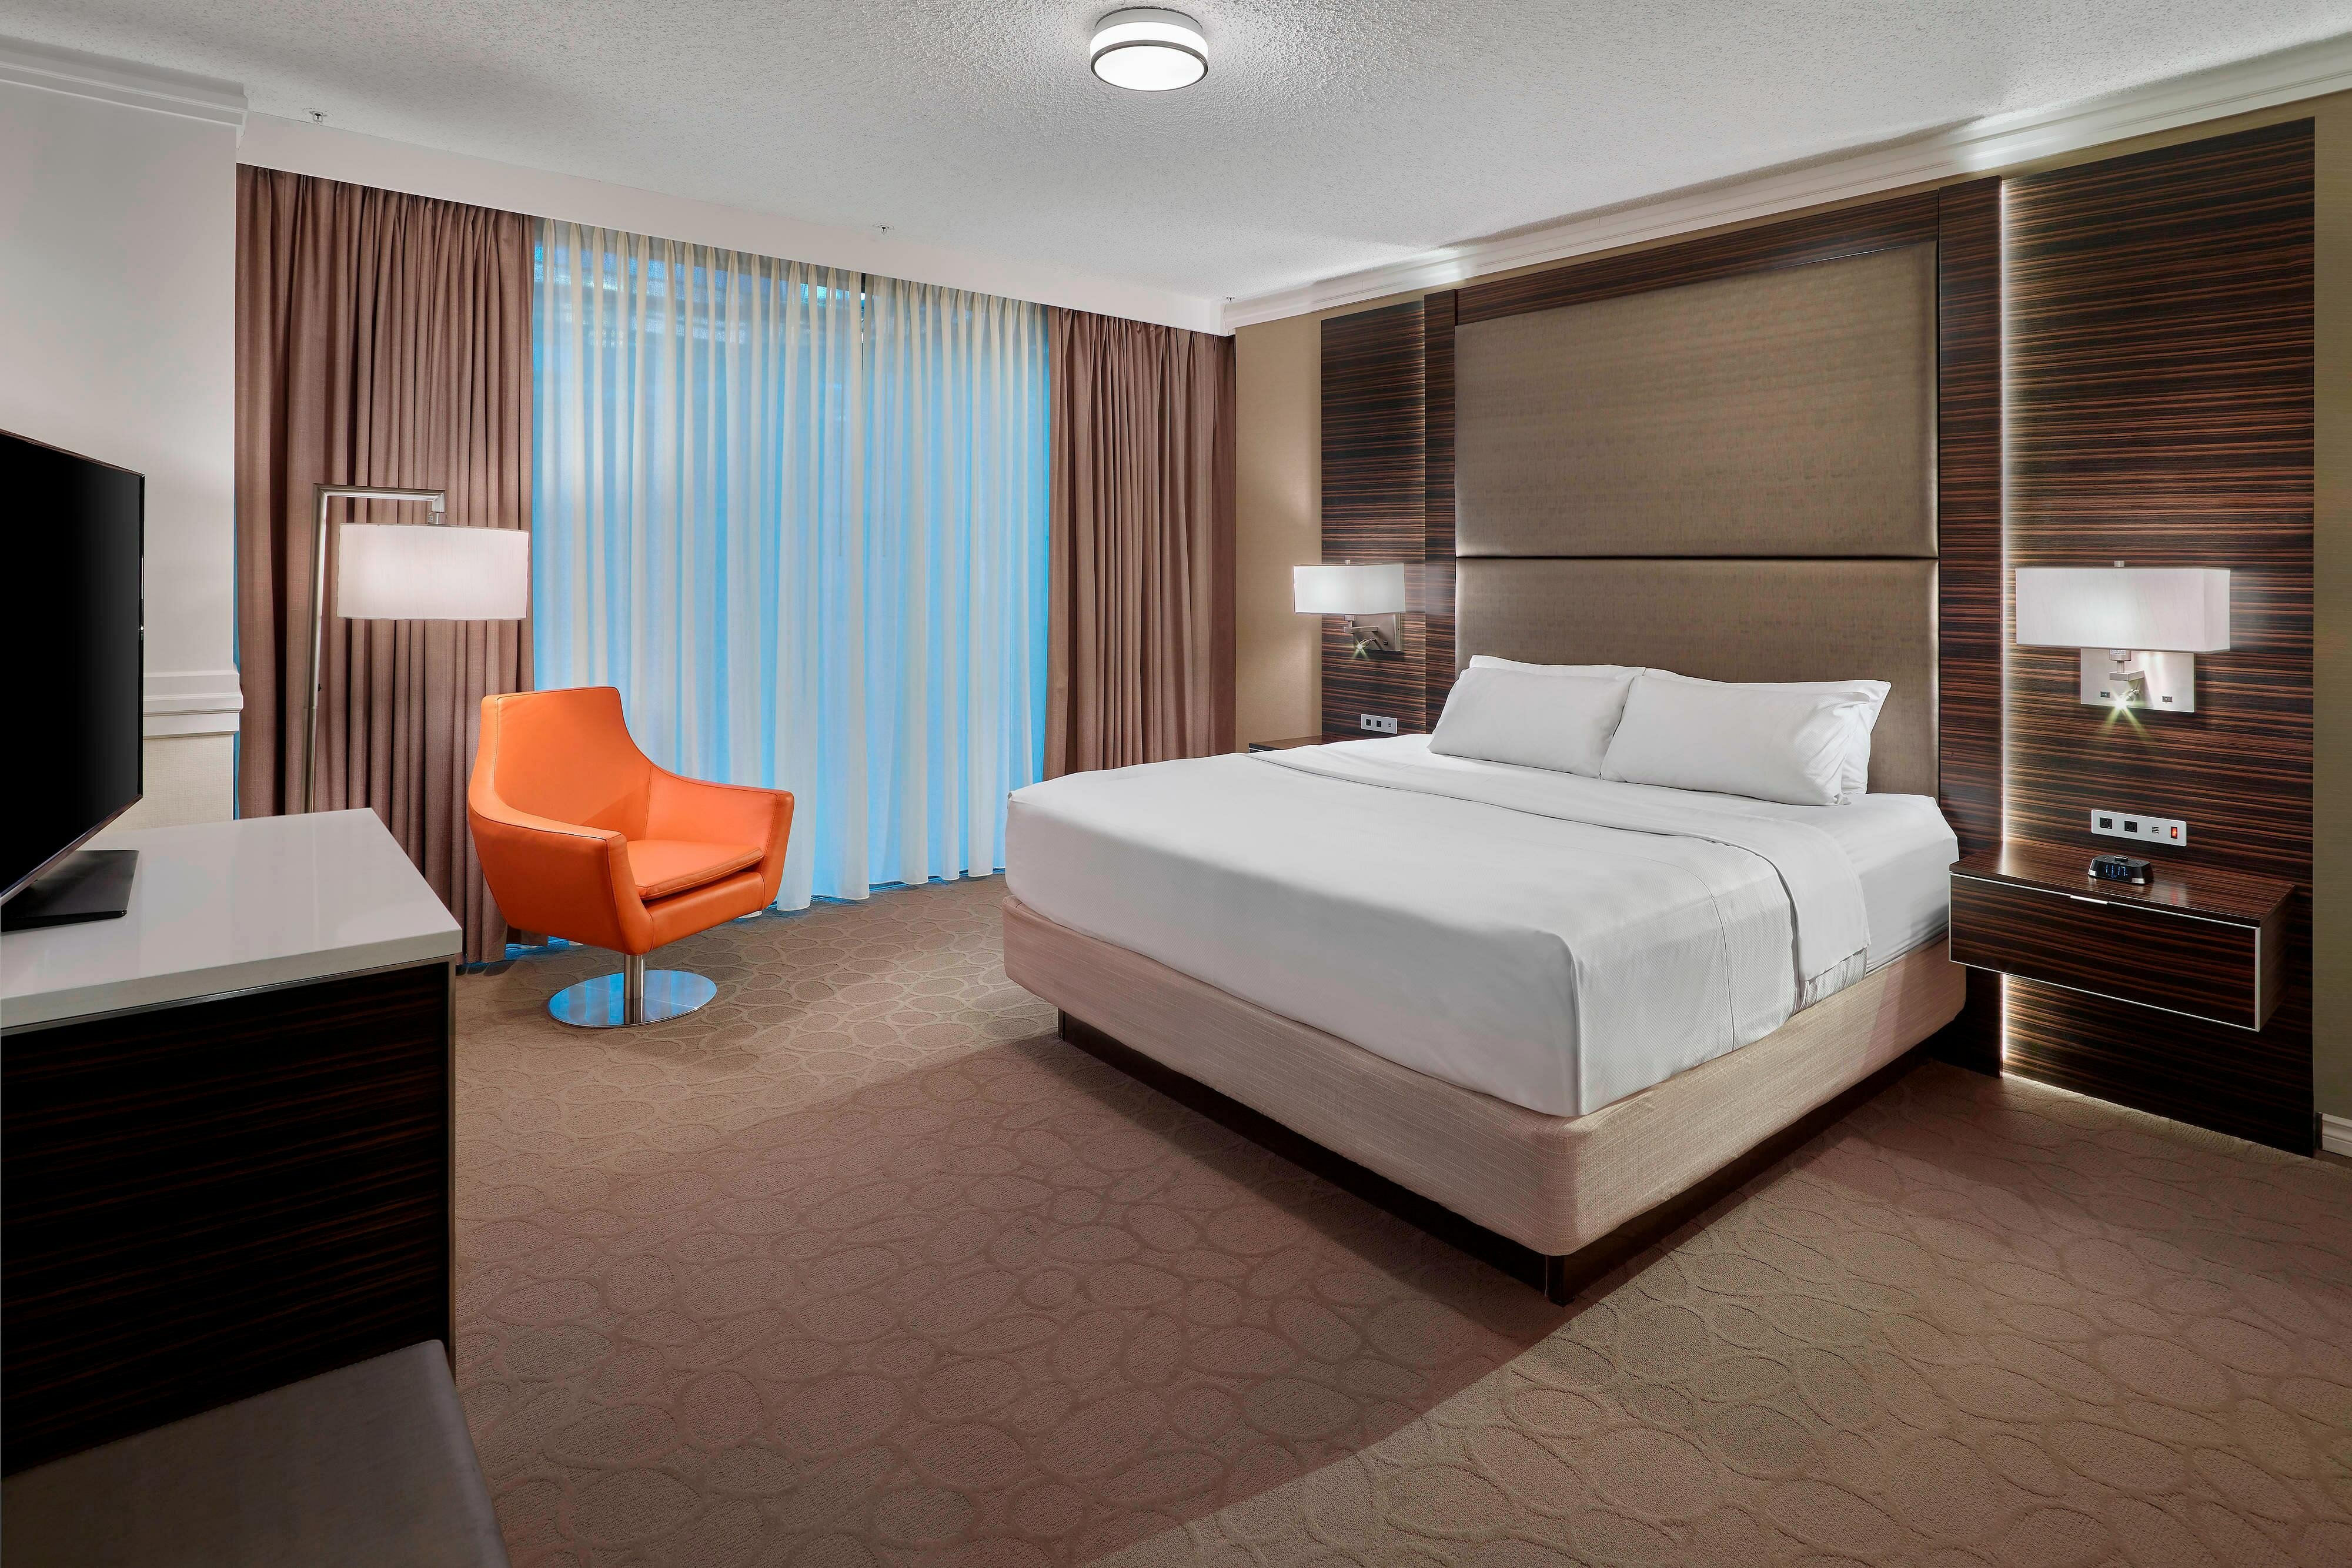 Photo of Delta Edmonton Centre Suite Hotel, Edmonton, AB, Canada